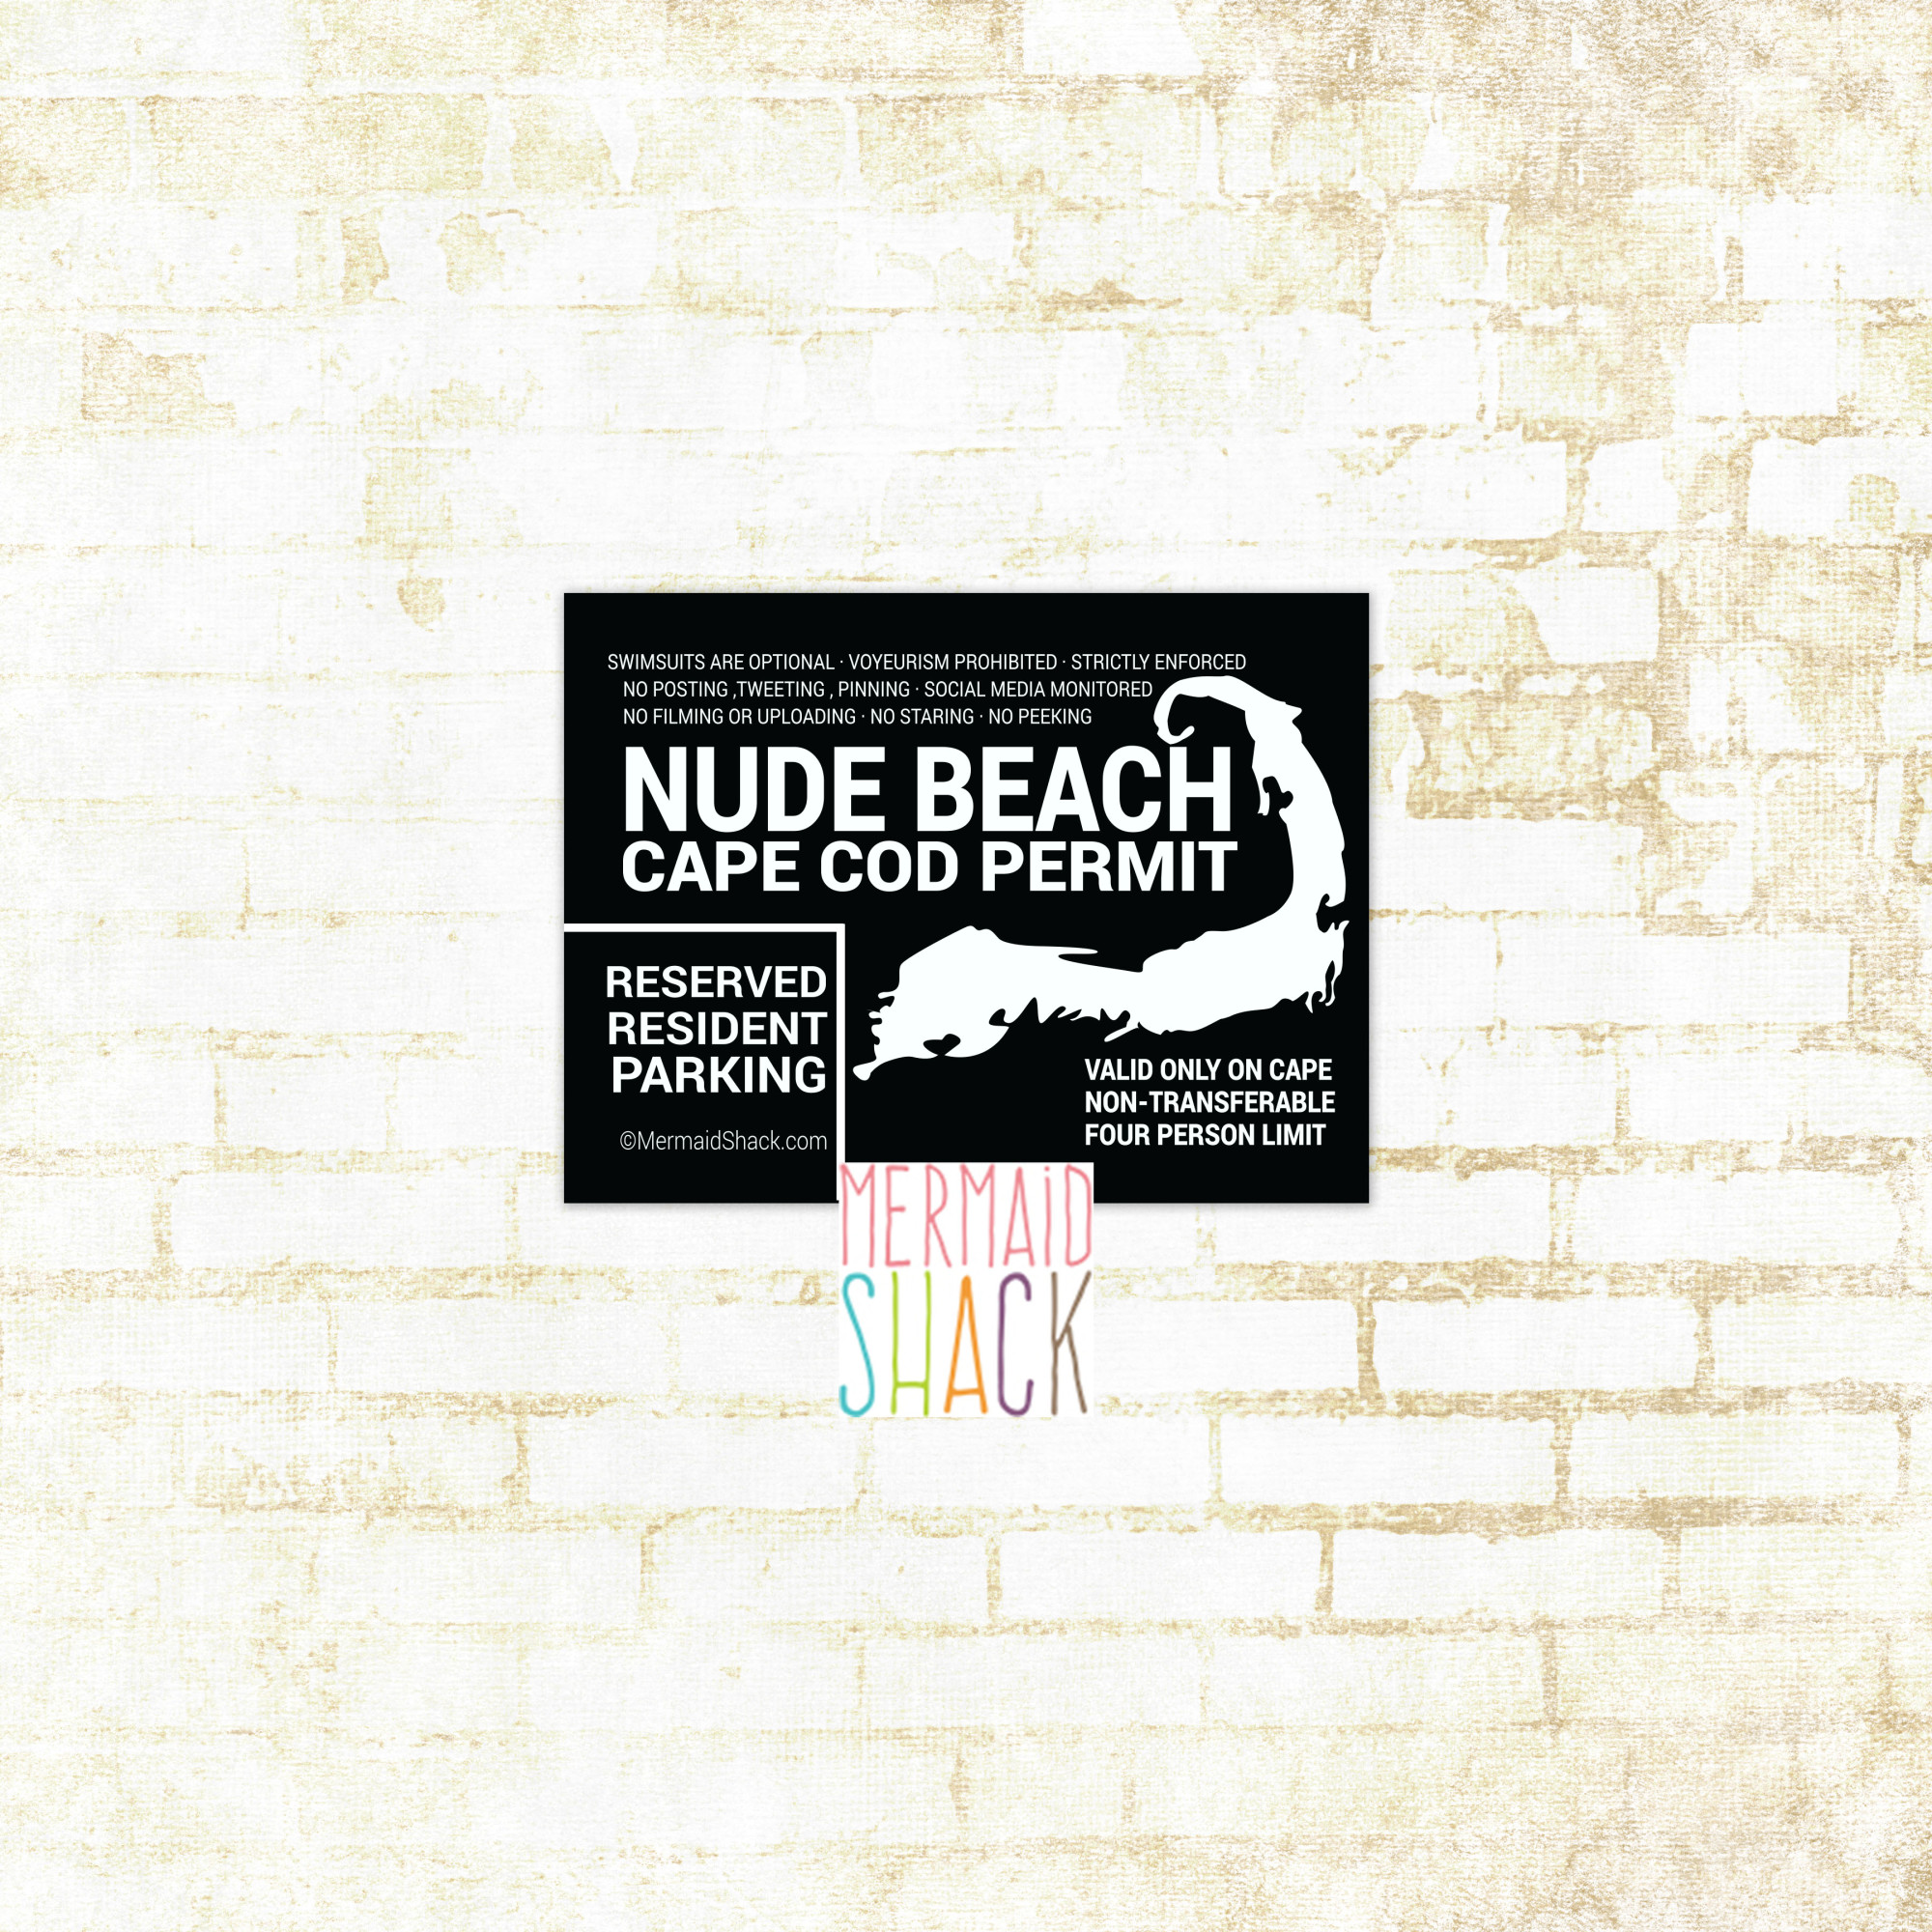 Cape Cod Nude Beach Sticker Mermaid Shack